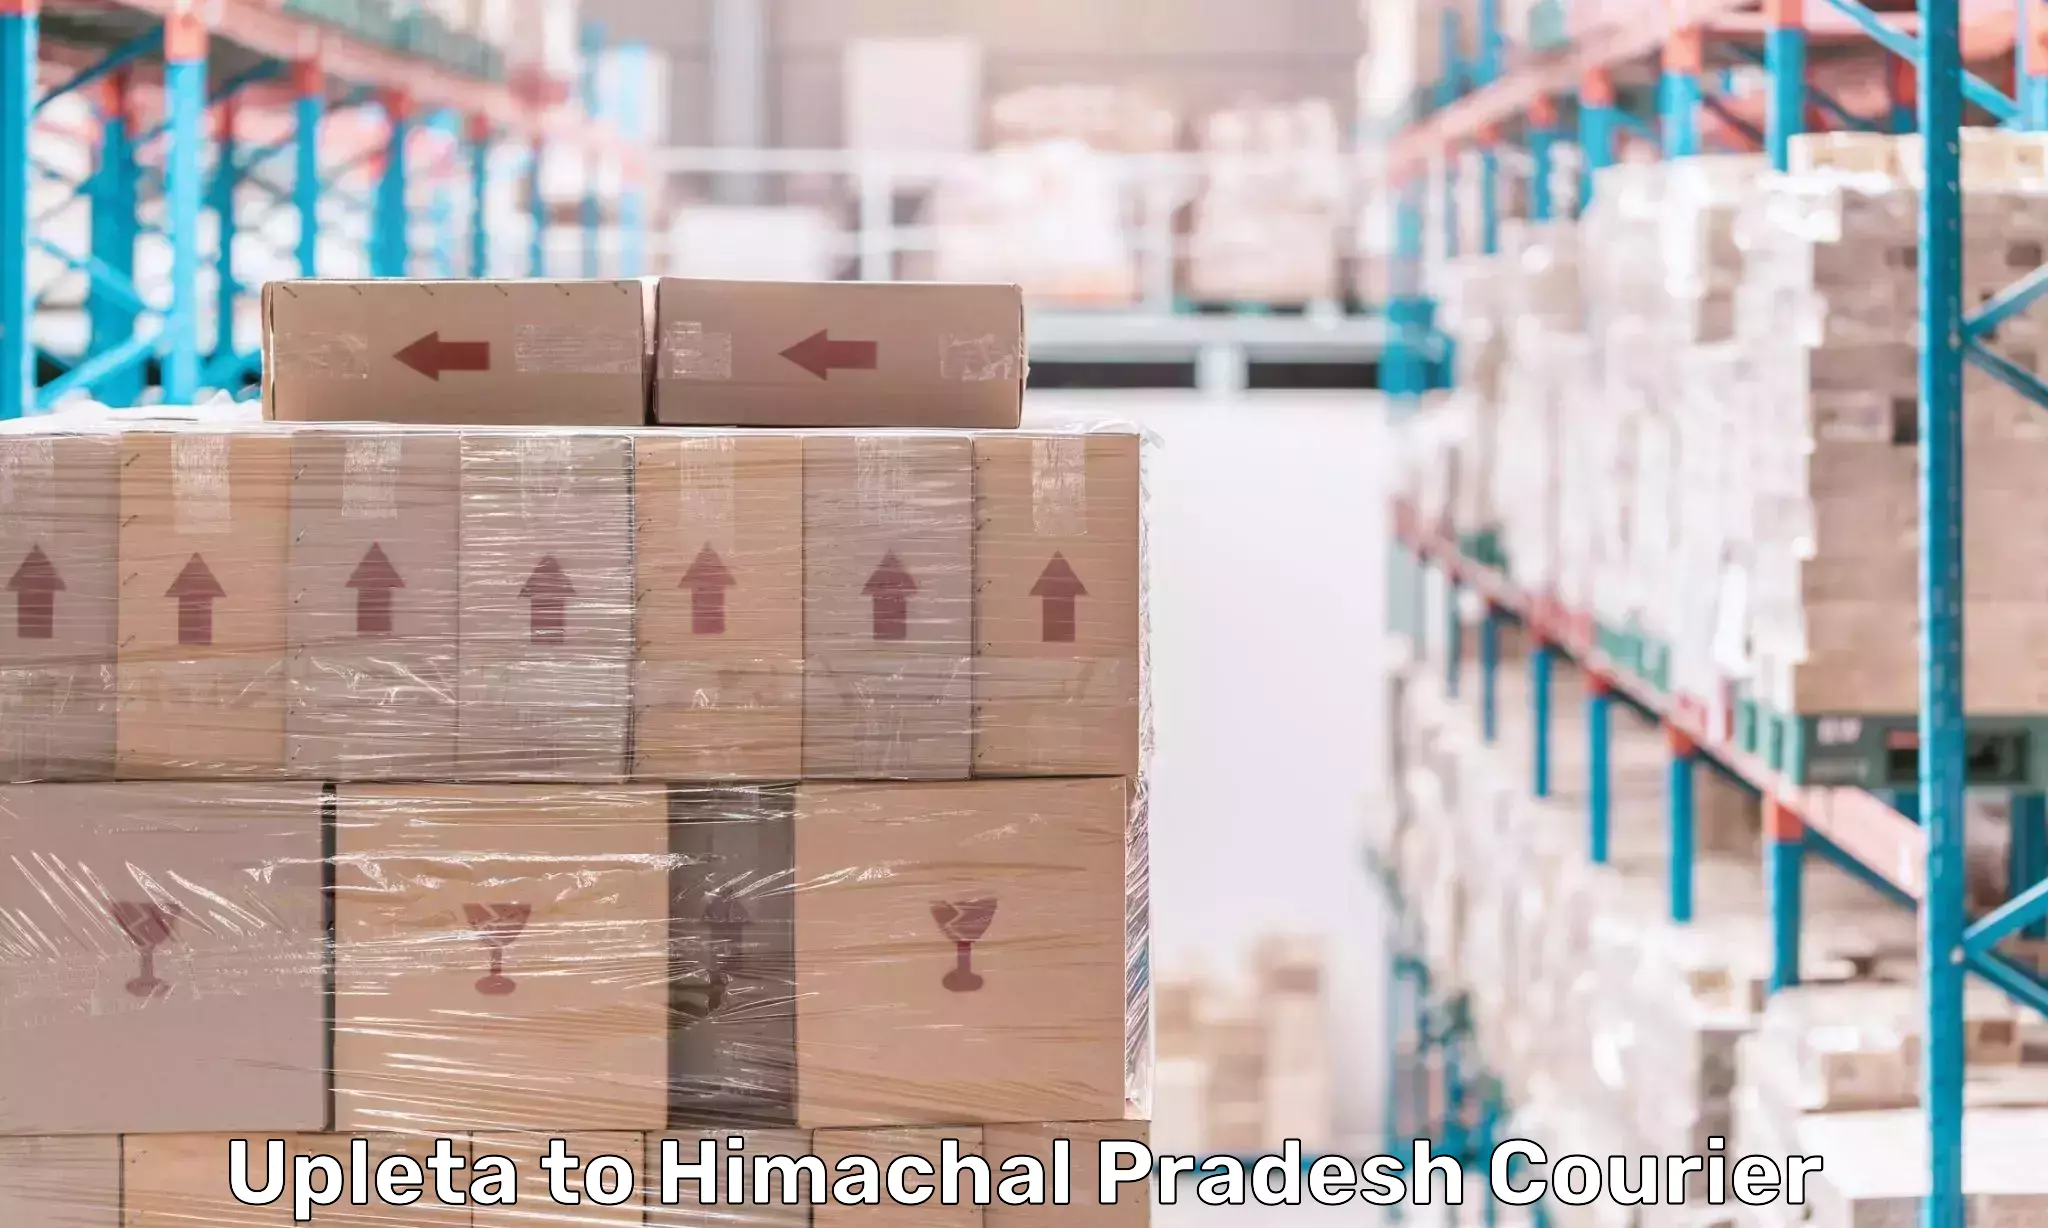 Global logistics network Upleta to Una Himachal Pradesh